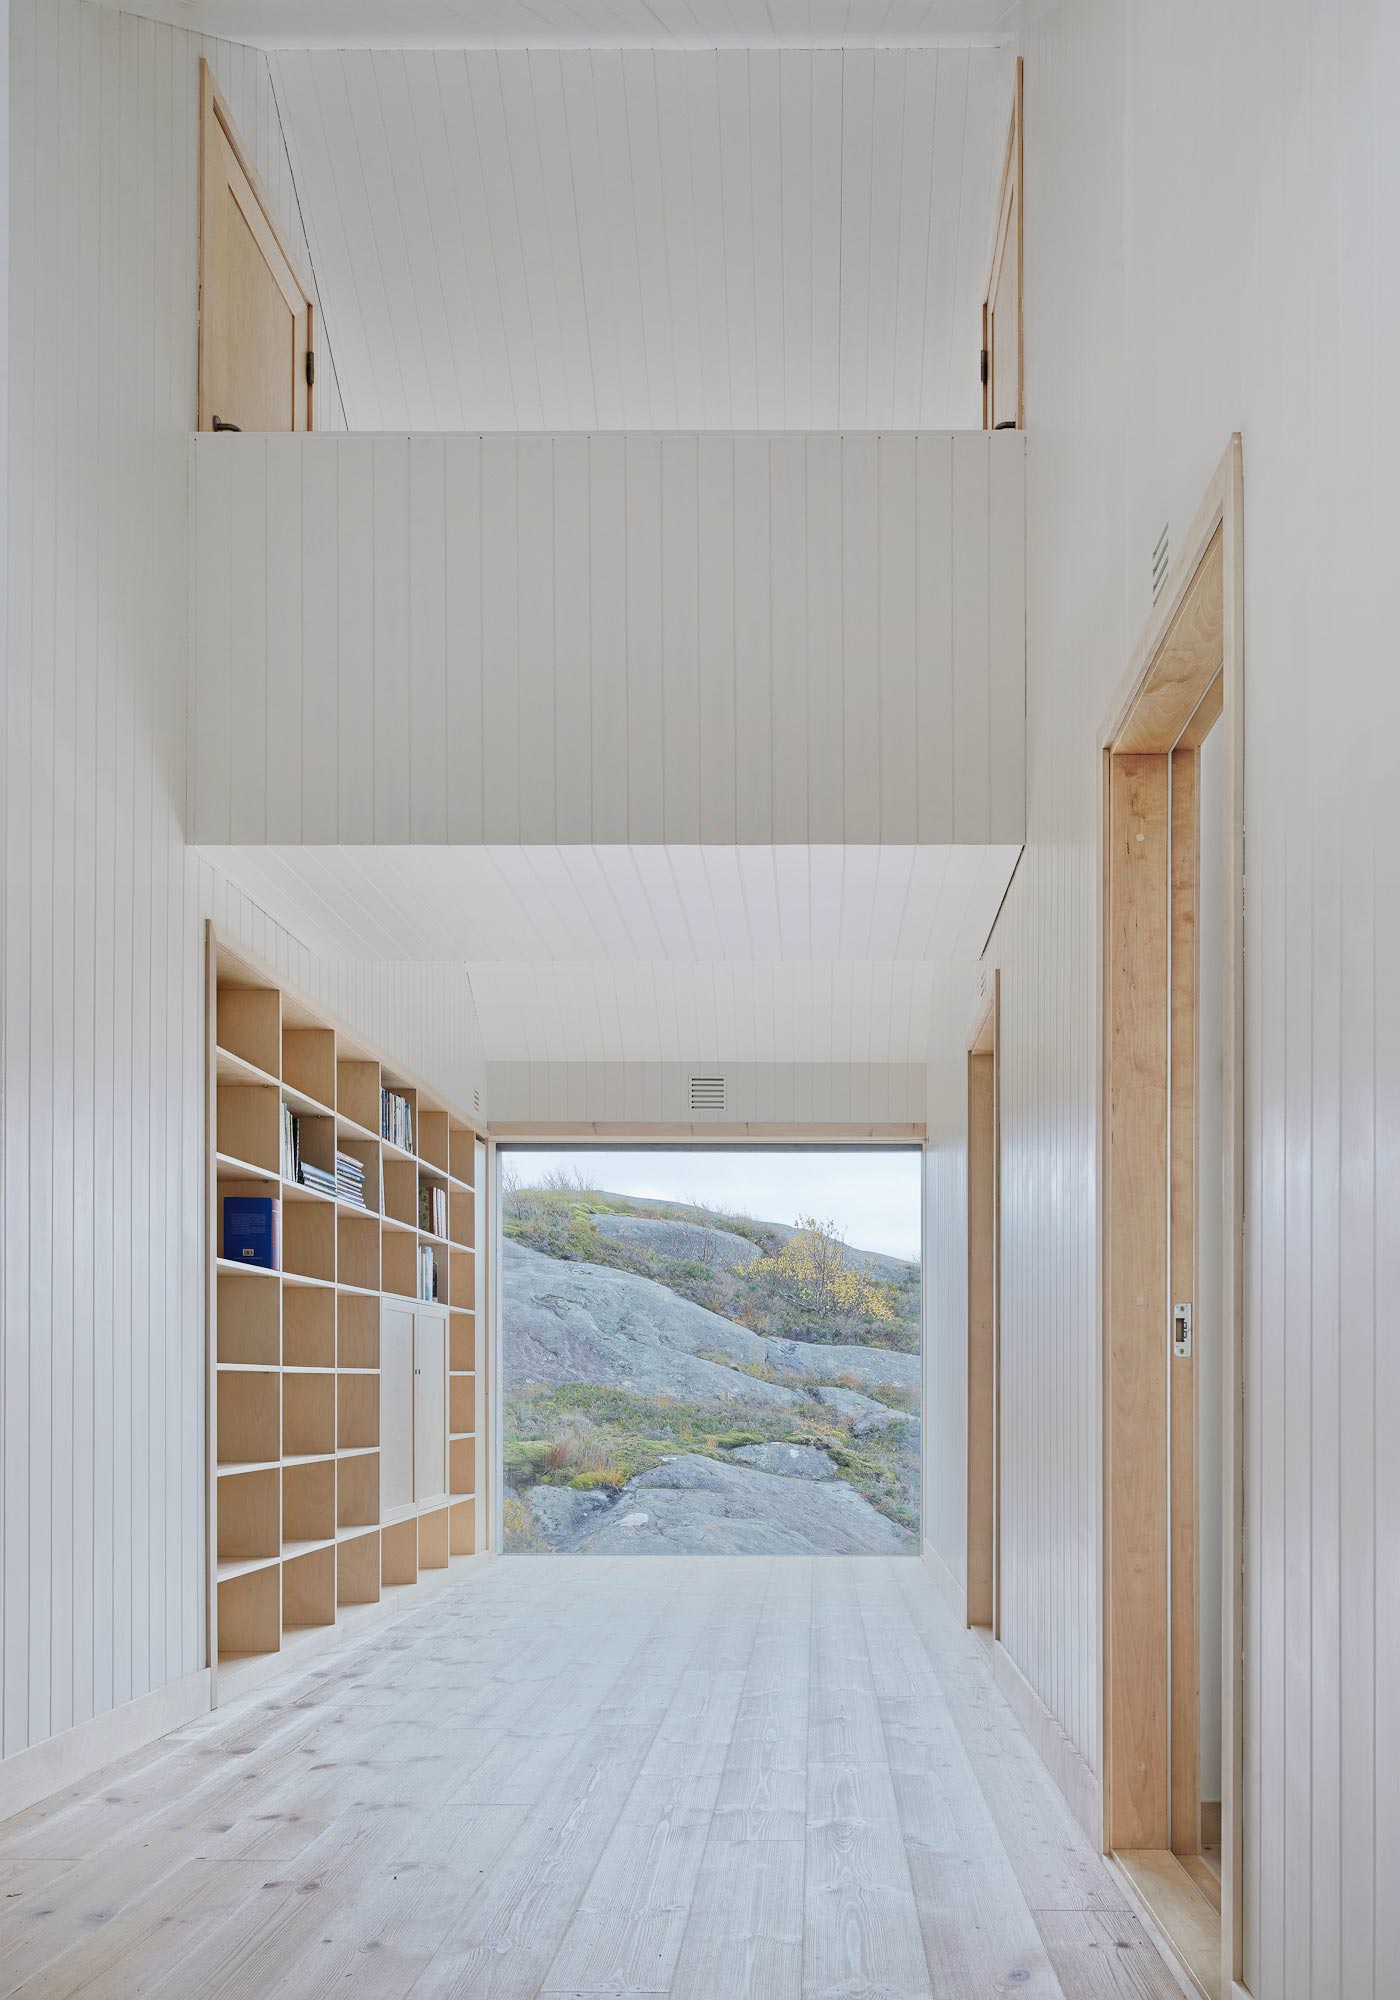 Maison d'écrivains, Vega Cottage, Archipel de Vega Norvège, Kolman Boye Architects